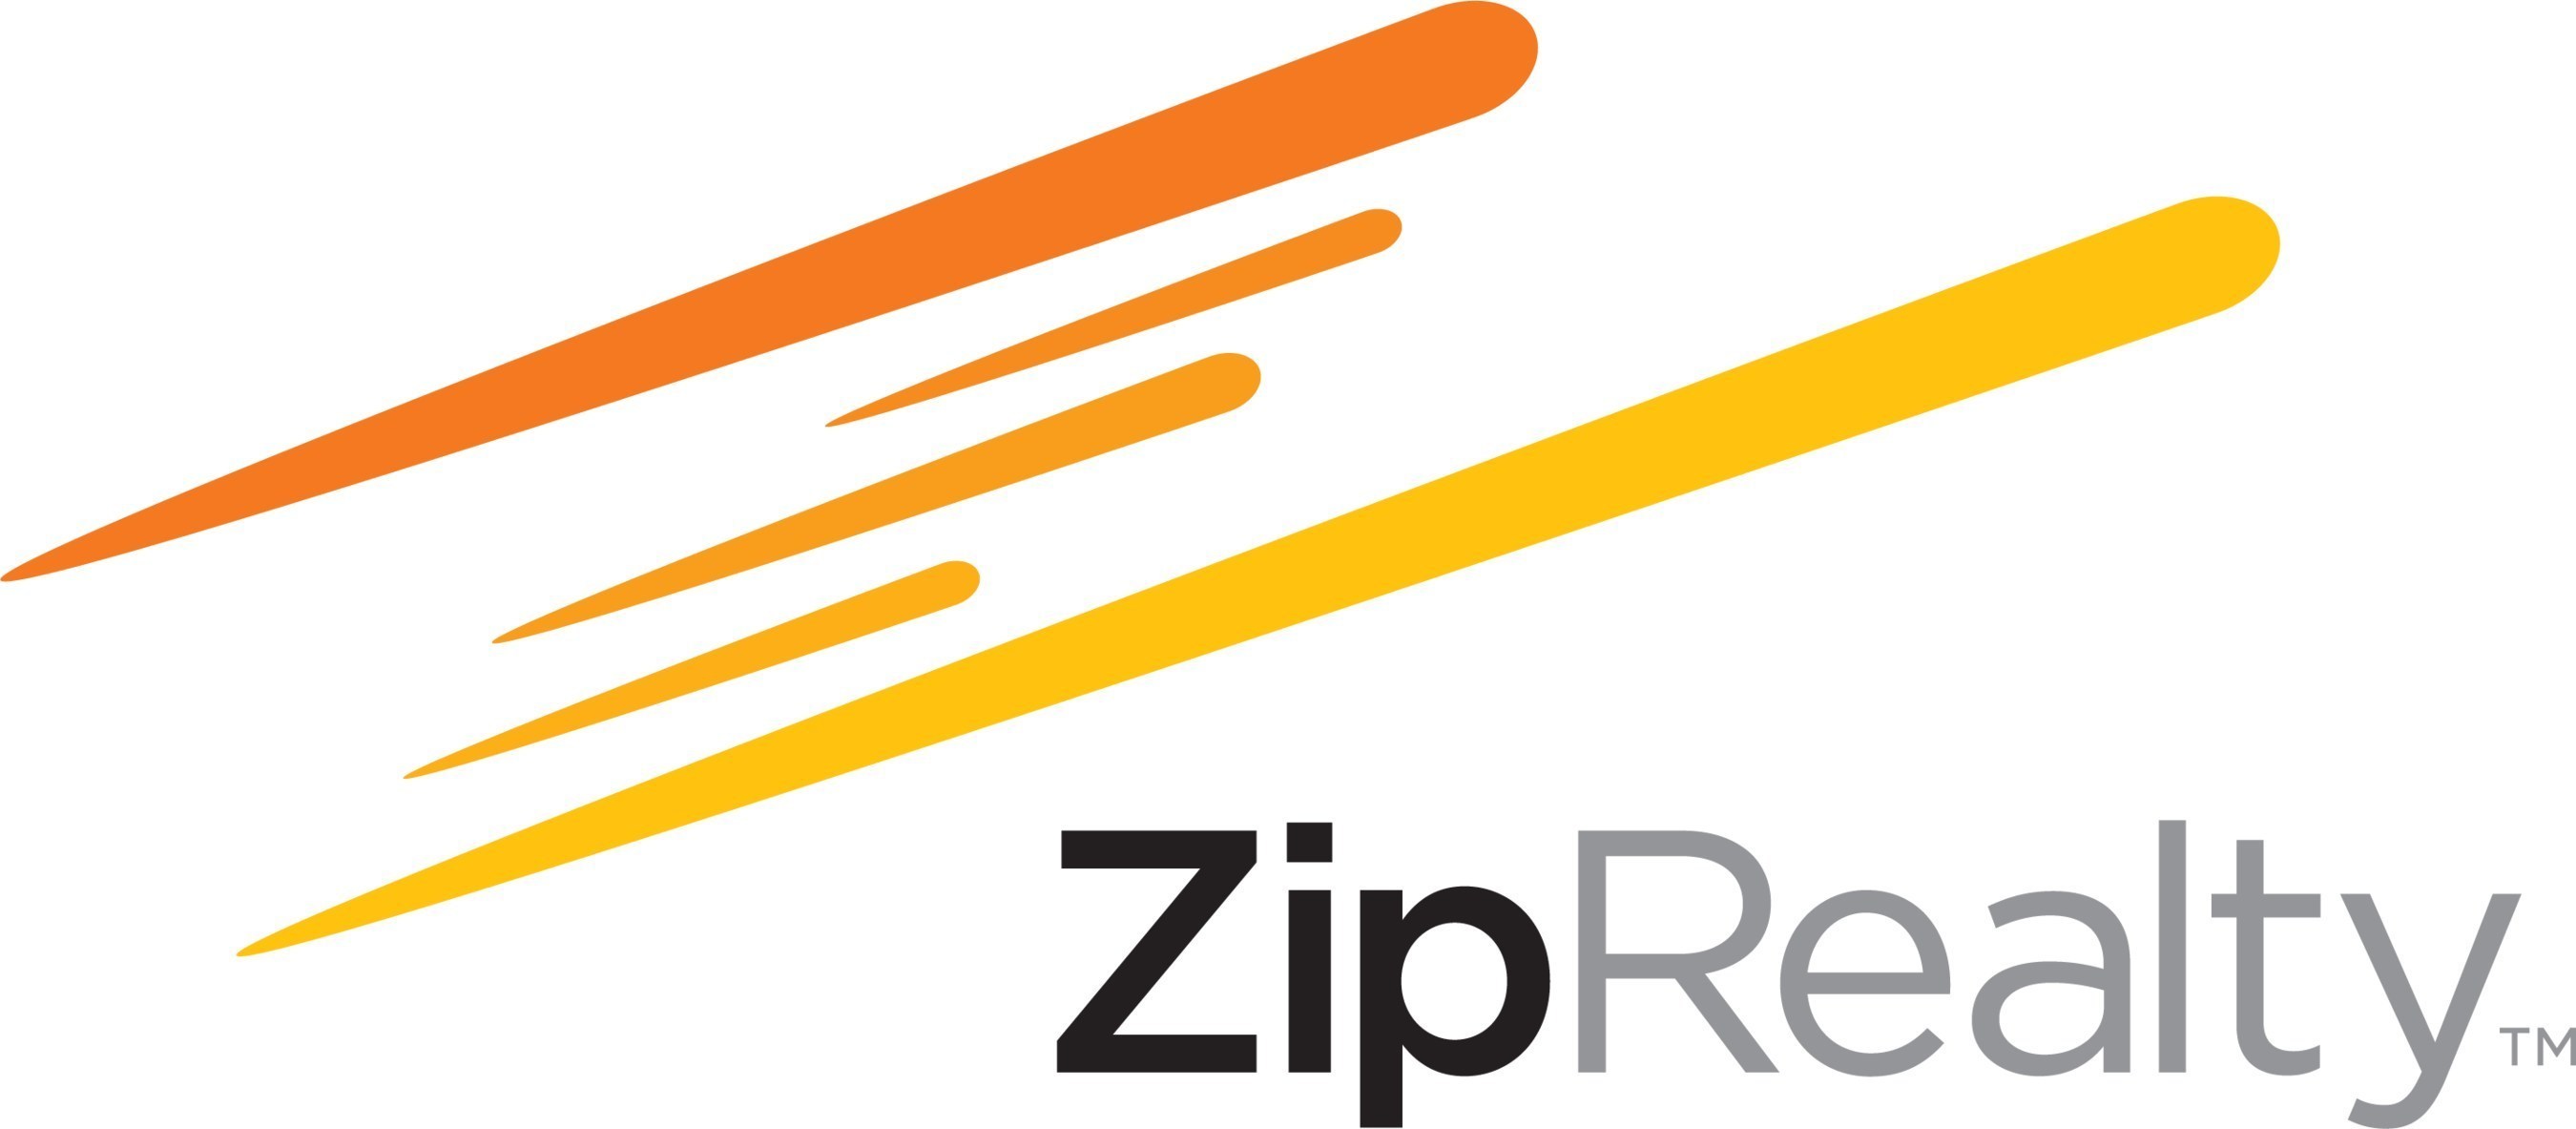 ZipRealty logo